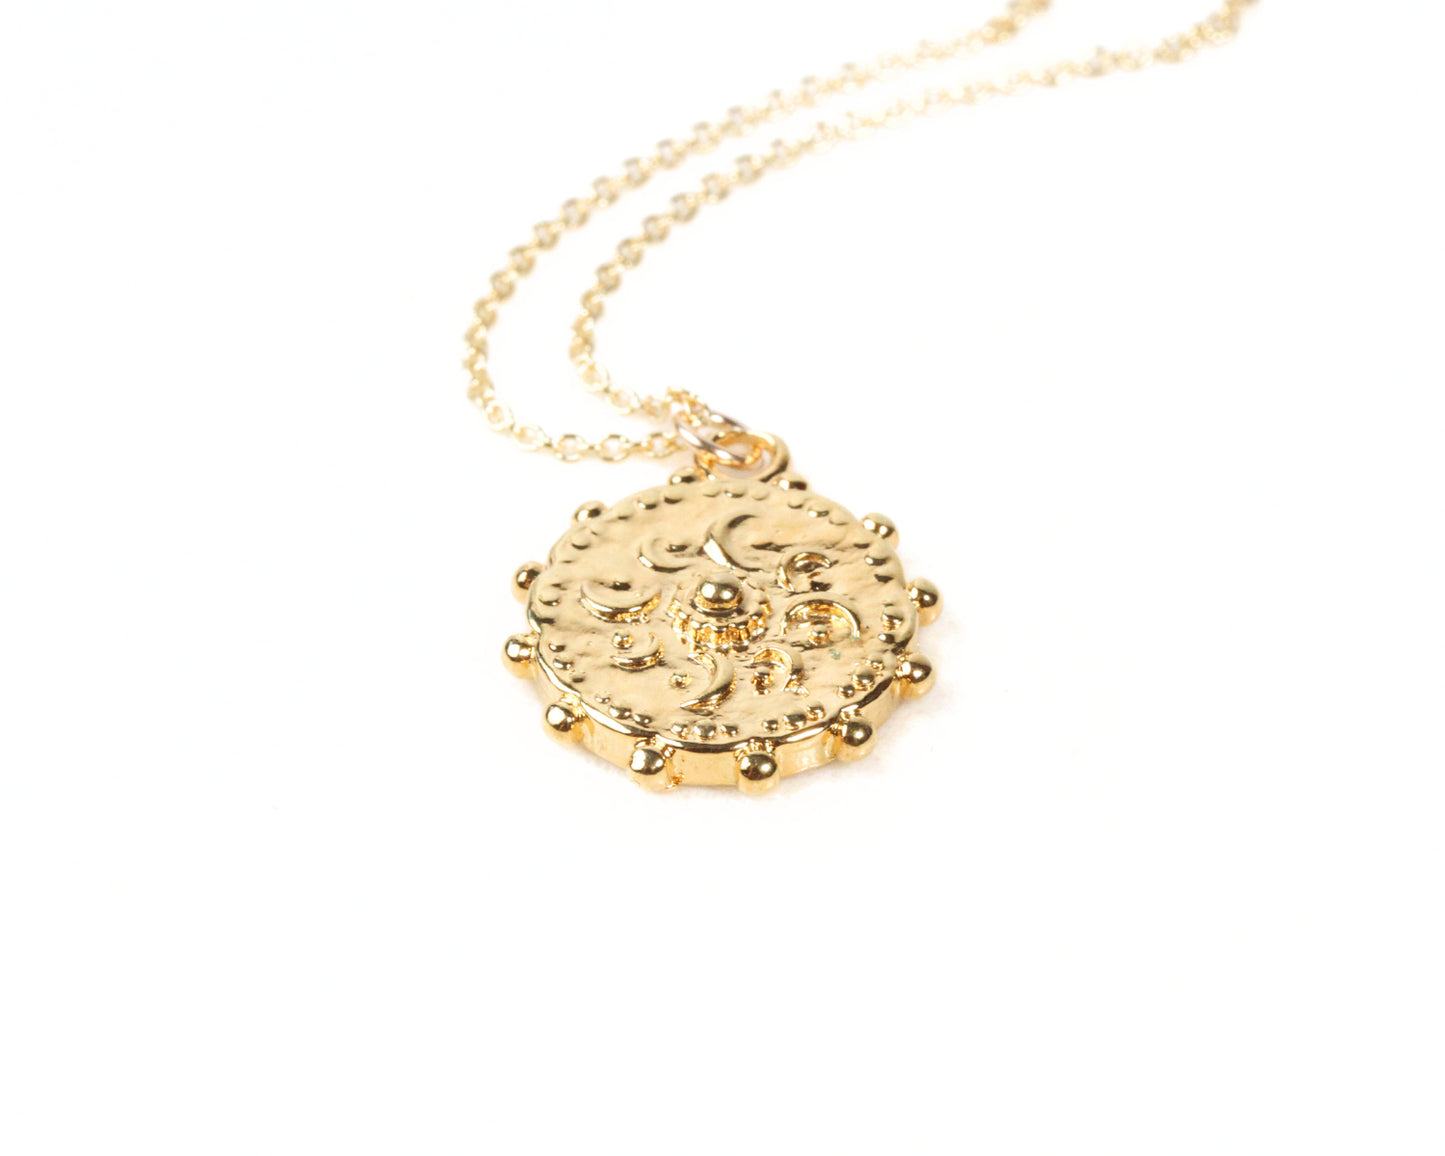 Luna Medallion Necklace